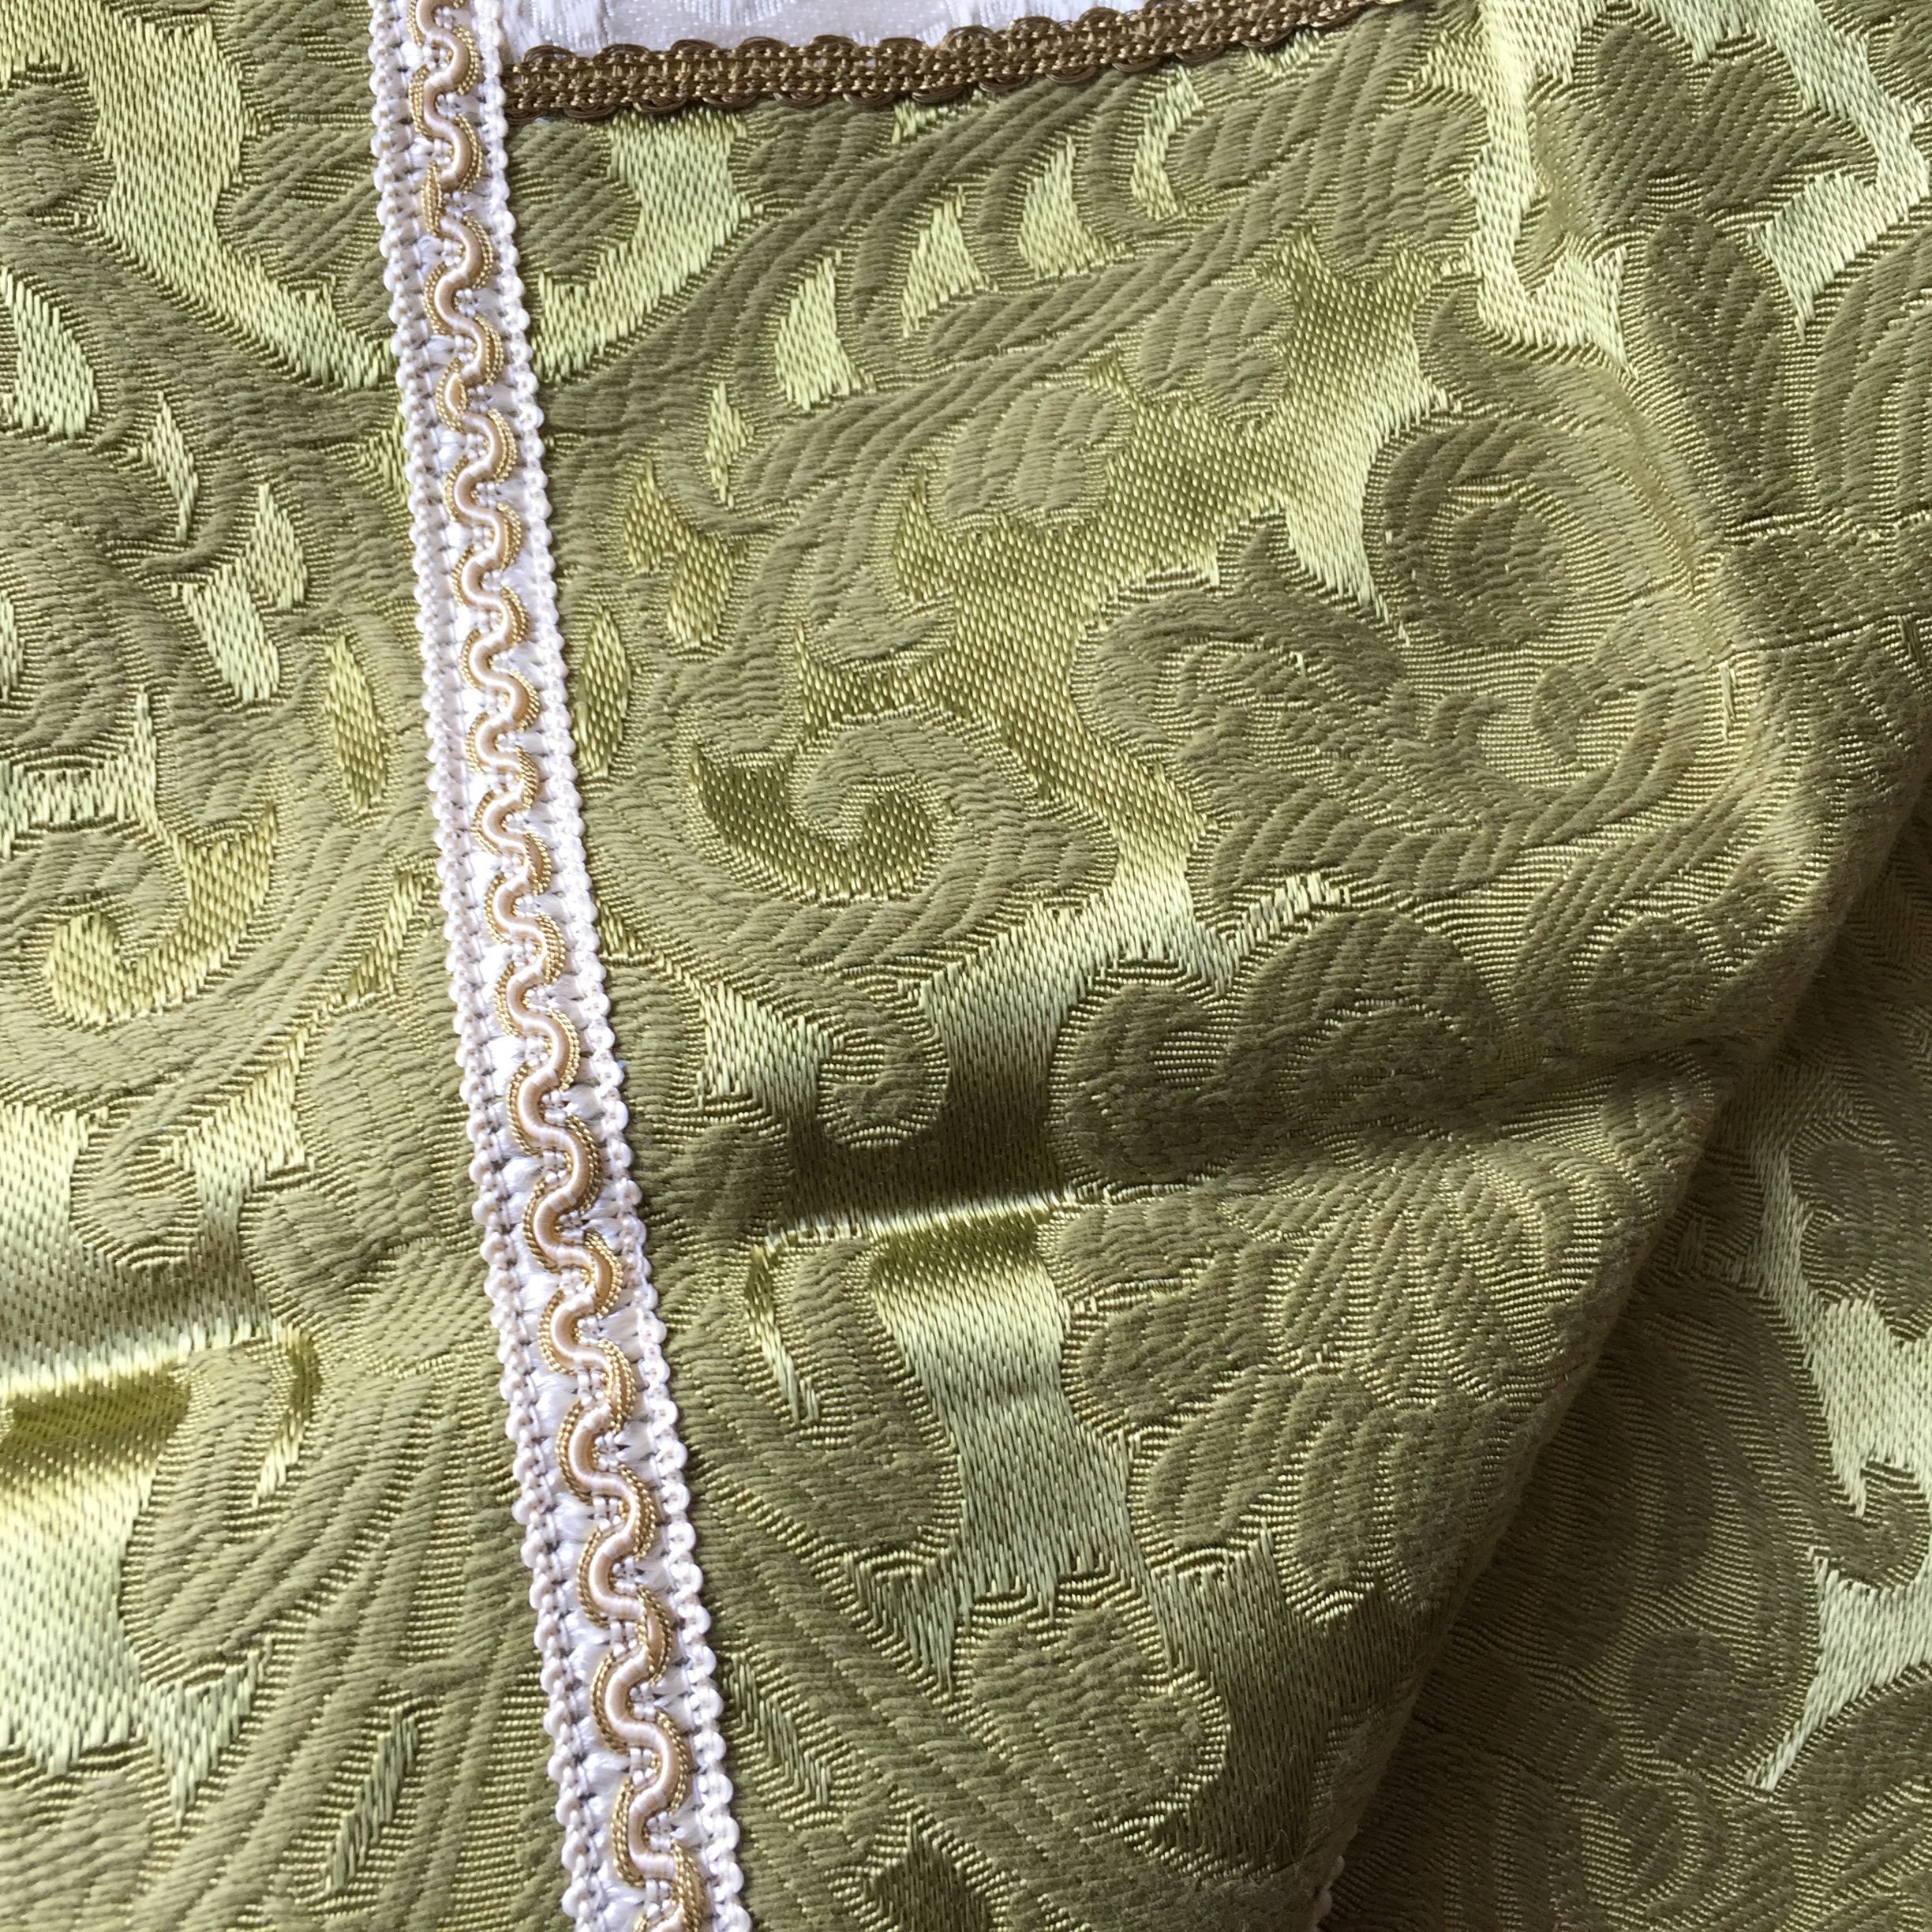 vintage doily precious silk damask fabric French antique chateau style Paris bourgeoise home decor gold metallic trim lace fringe